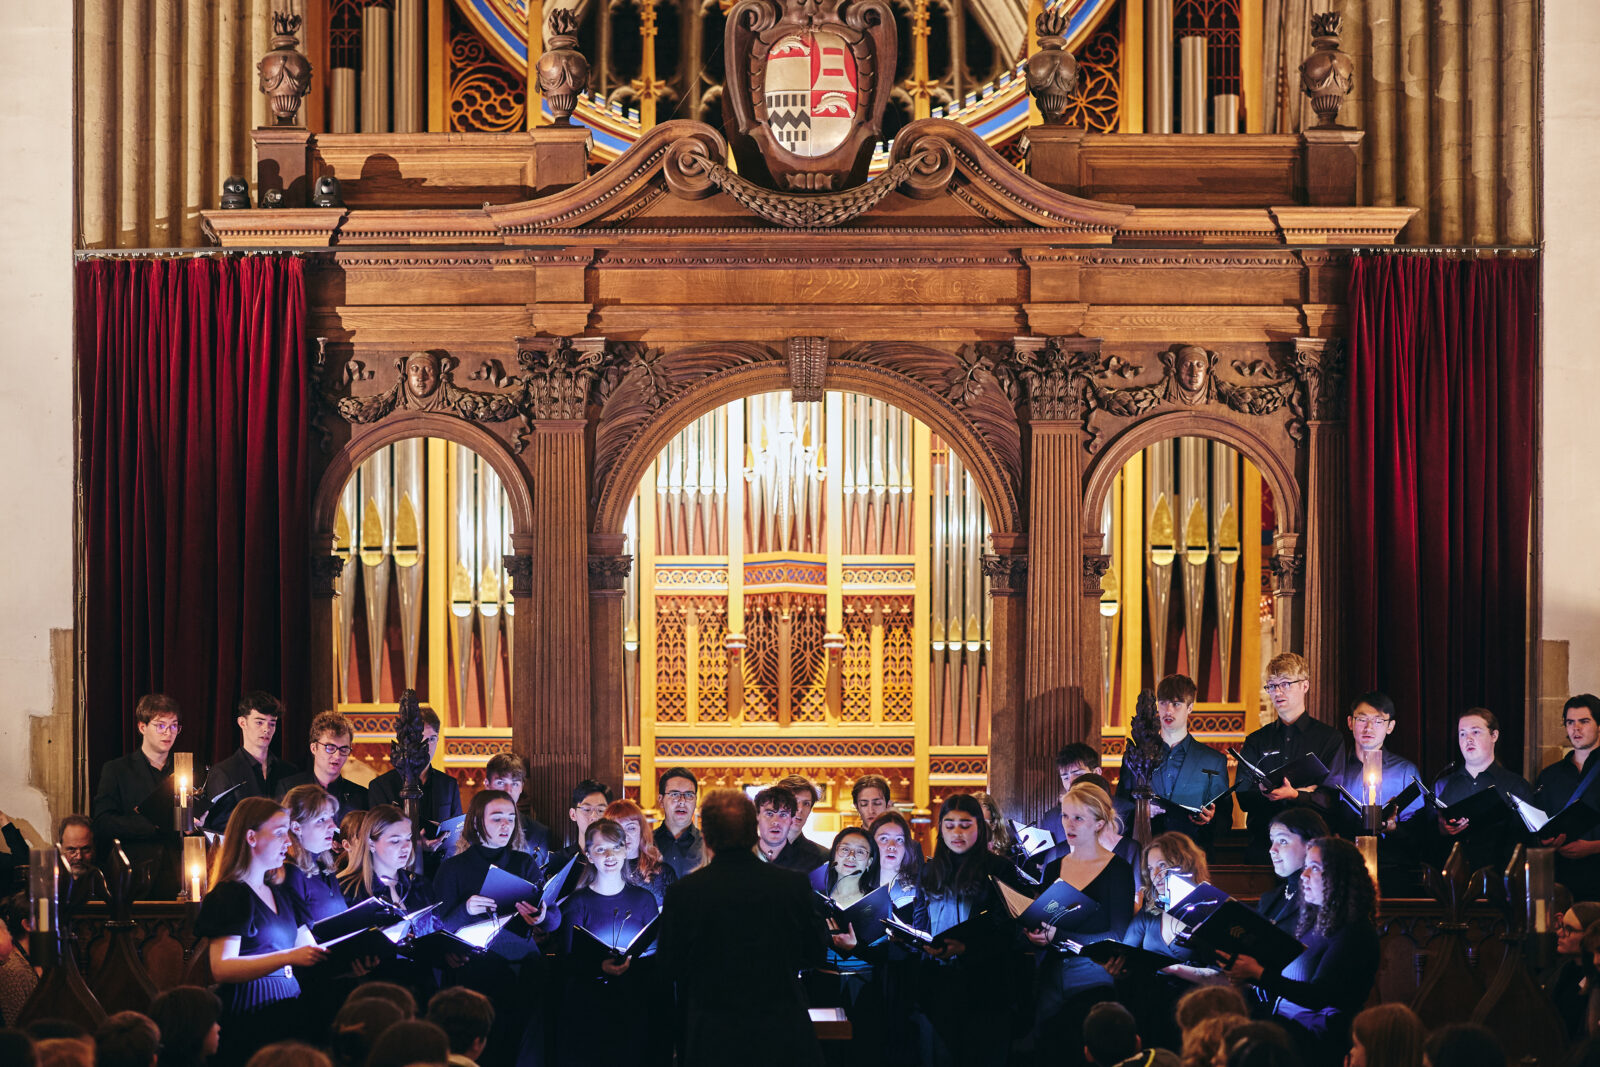 The Choir of Merton College, Oxford